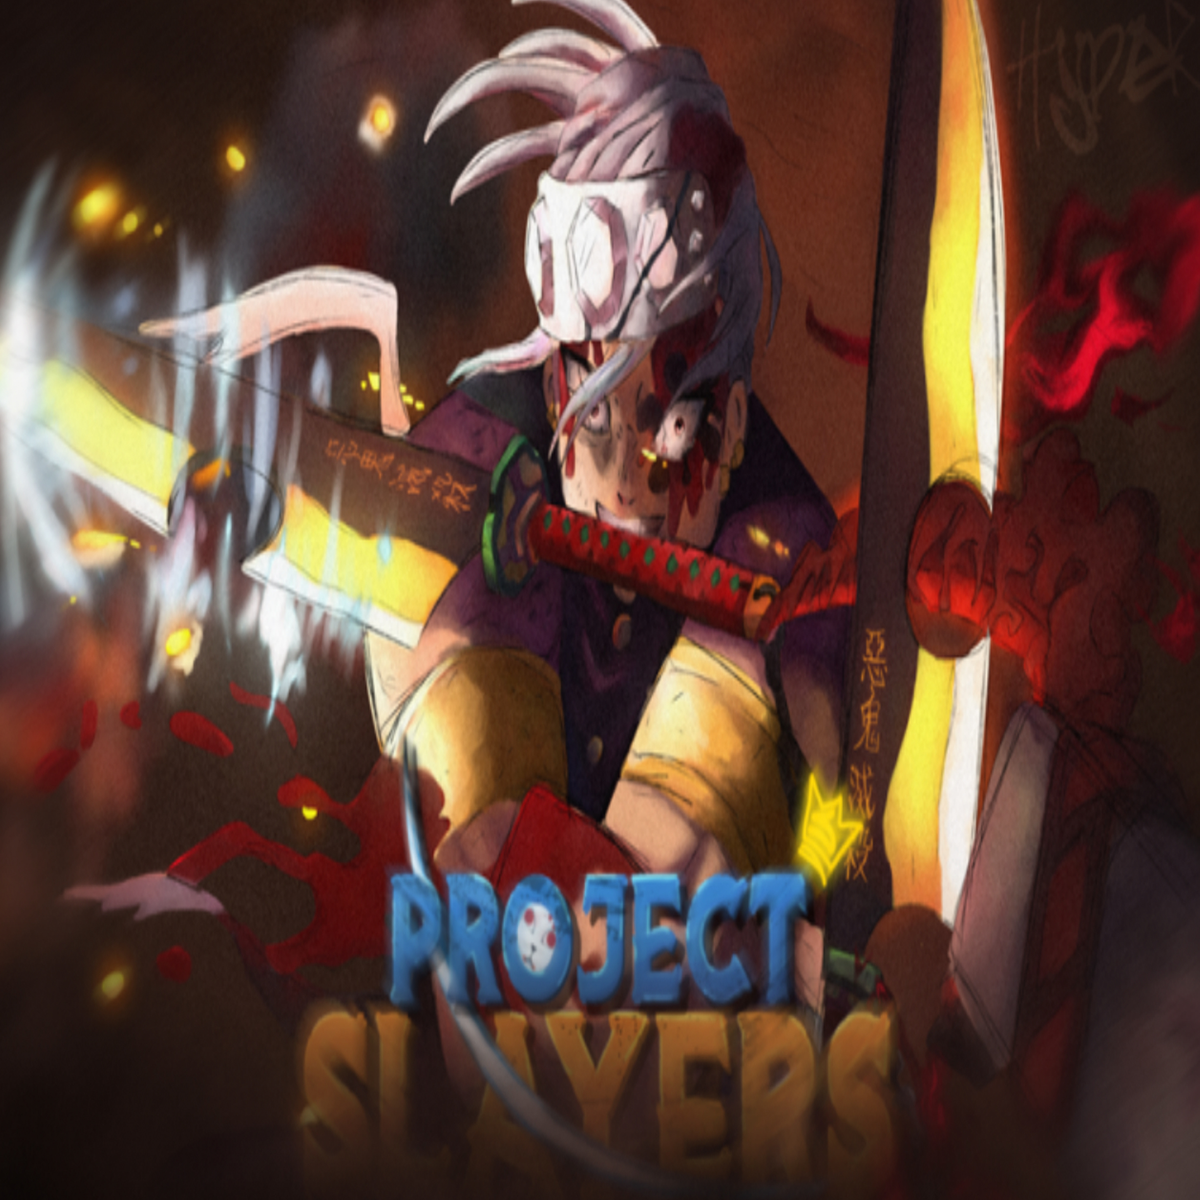 Slayers Unleashed Codes - Claim free rerolls (April 2022)